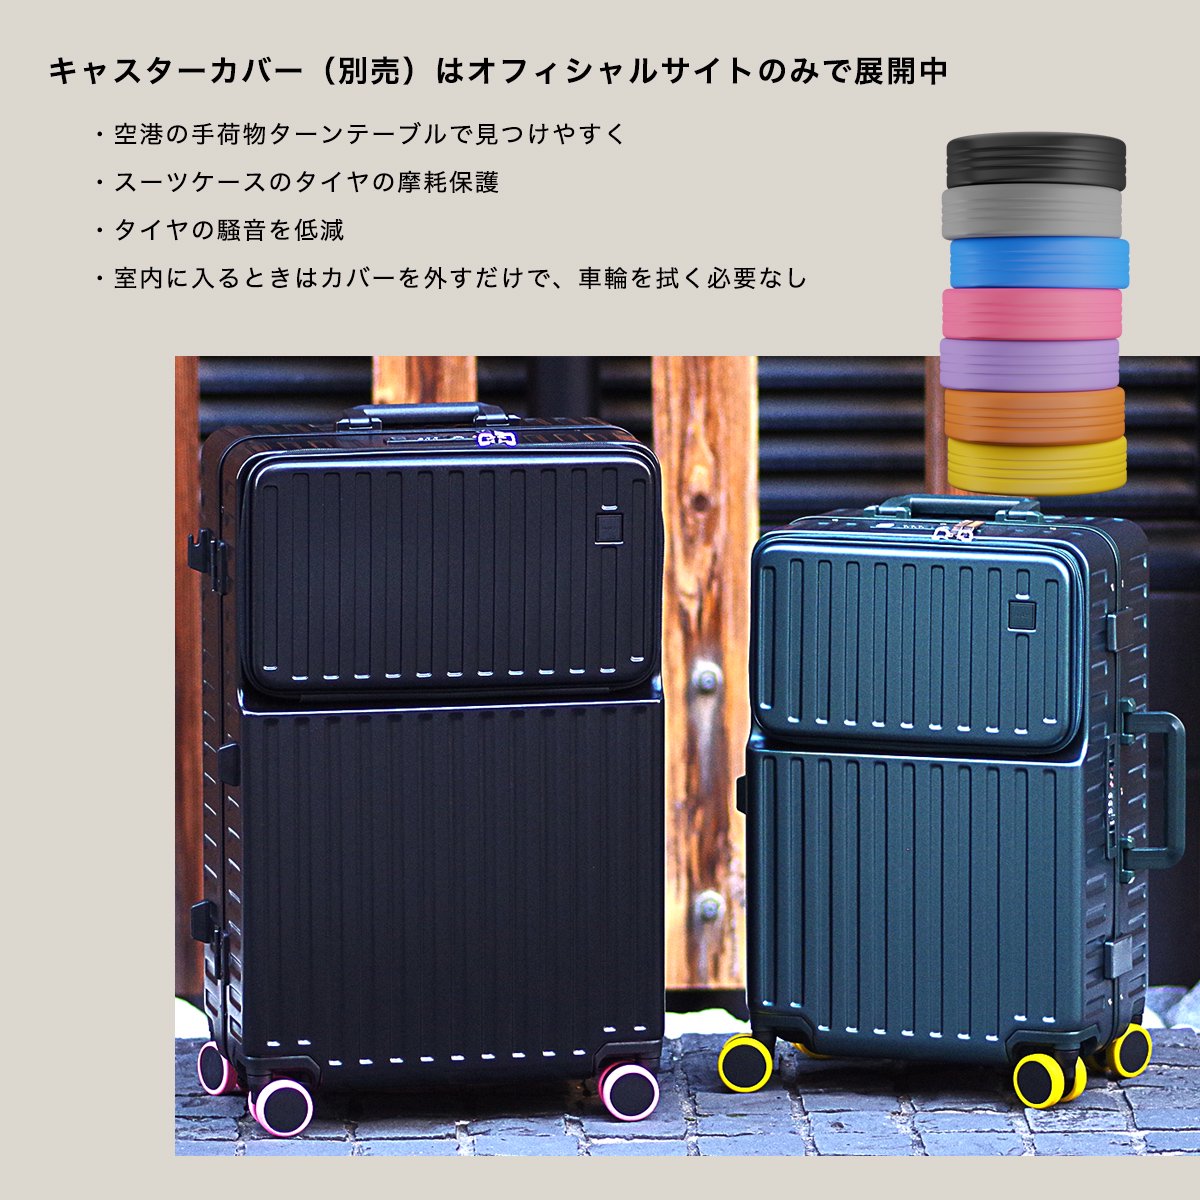 OUNCE 多機能 スーツケース アルミフレーム Sサイズ 機内持ち込み